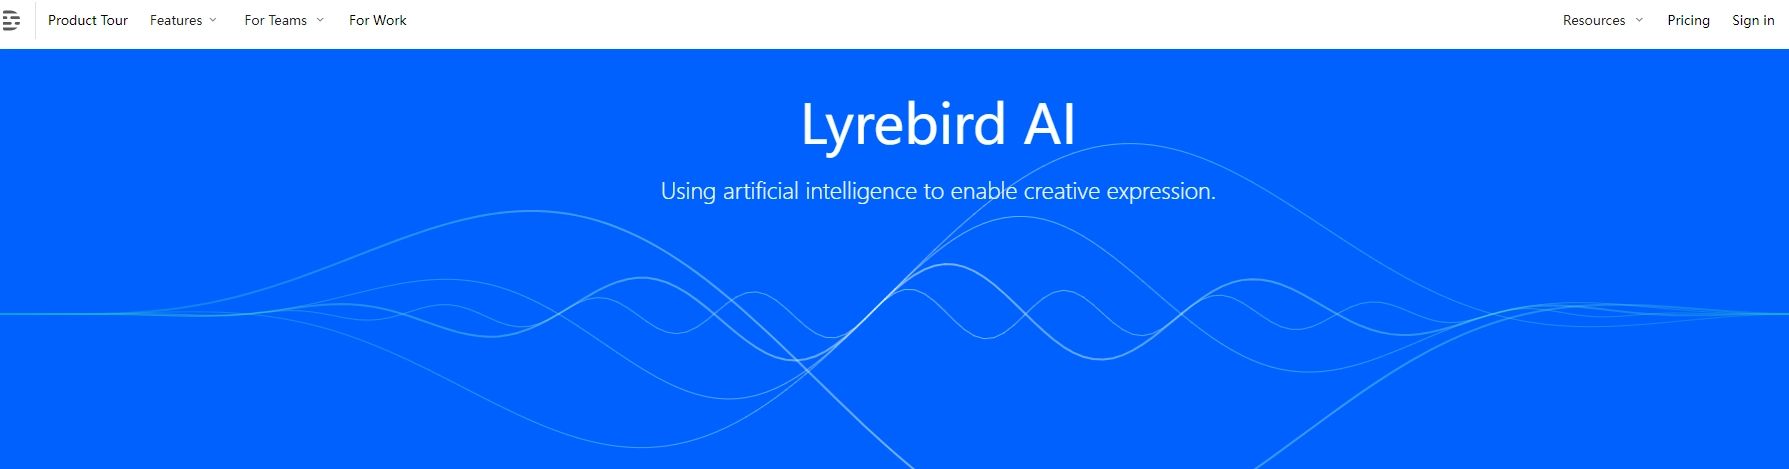 Lyrebird AI